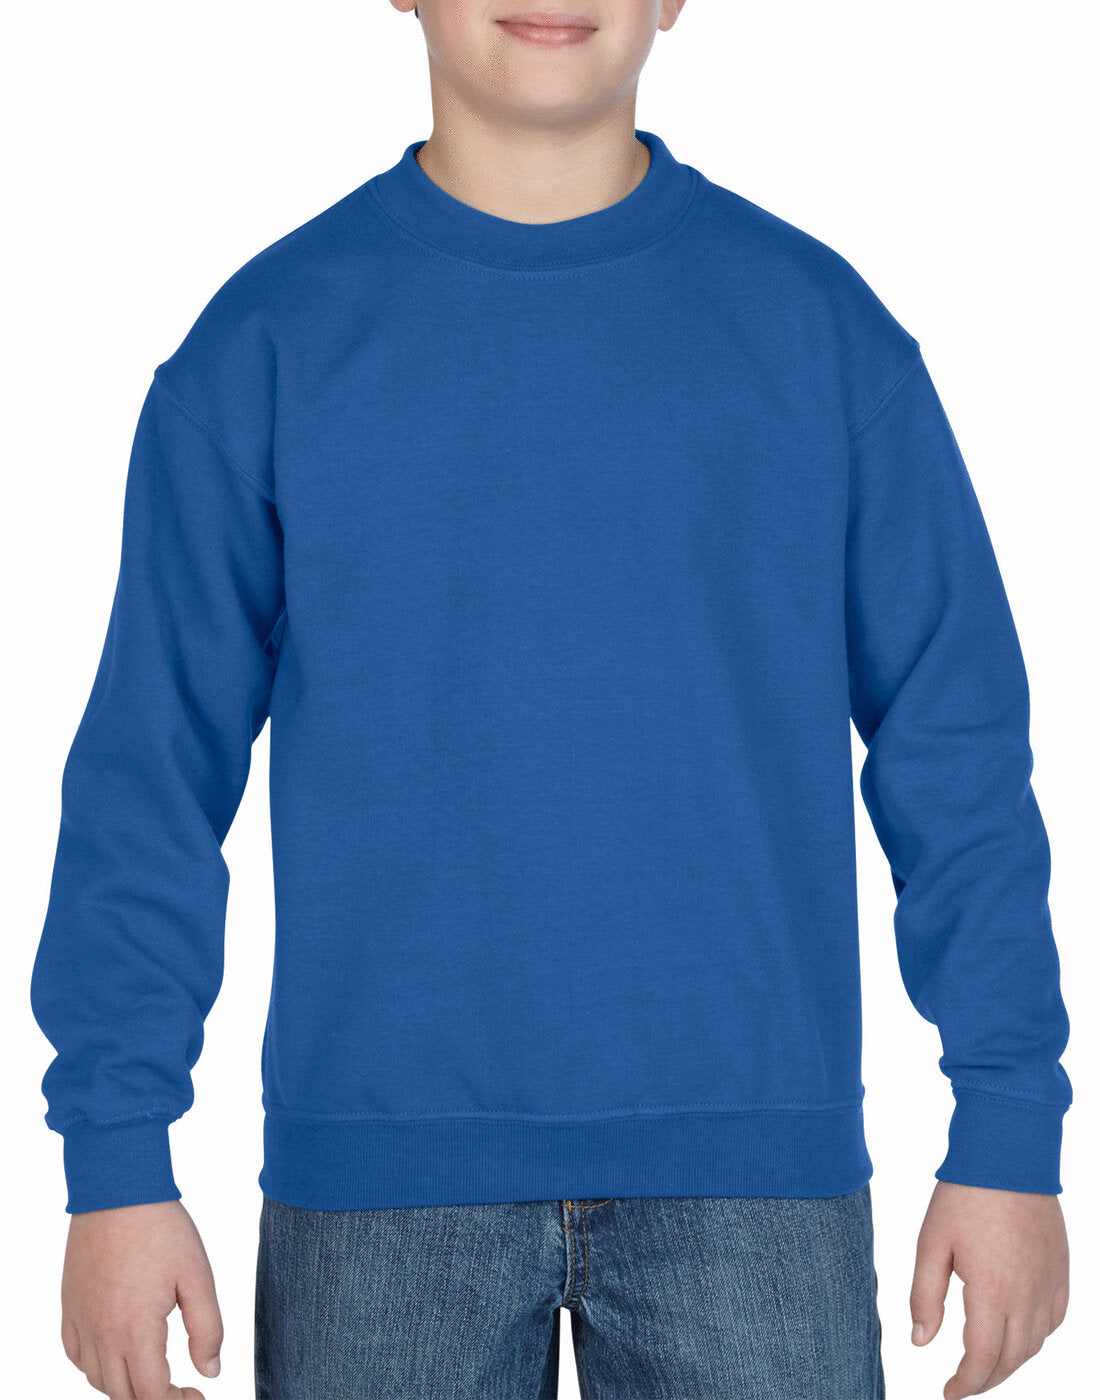 Gildan Kids Heavyblend Crew Neck Sweatshirt - Royal Blue